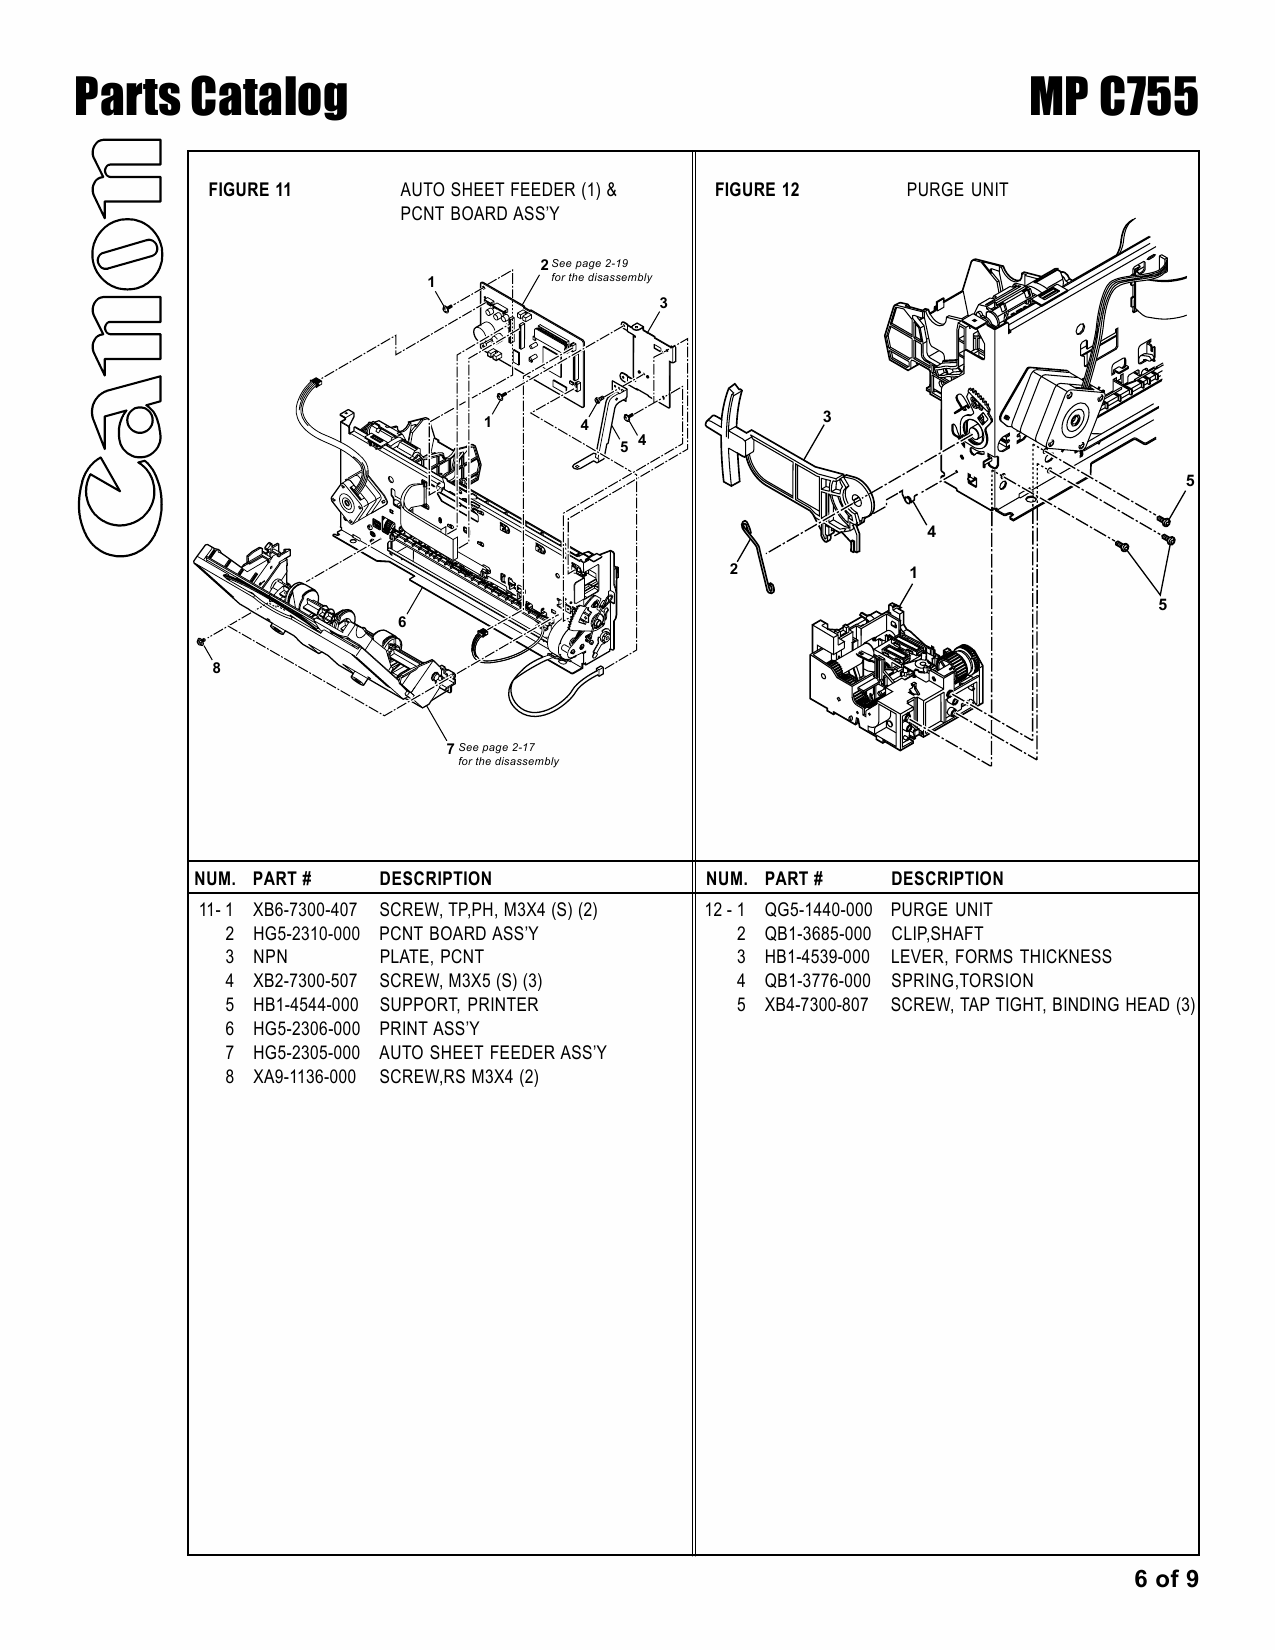 Canon MultiPASS MP-C755 Parts Catalog Manual-6